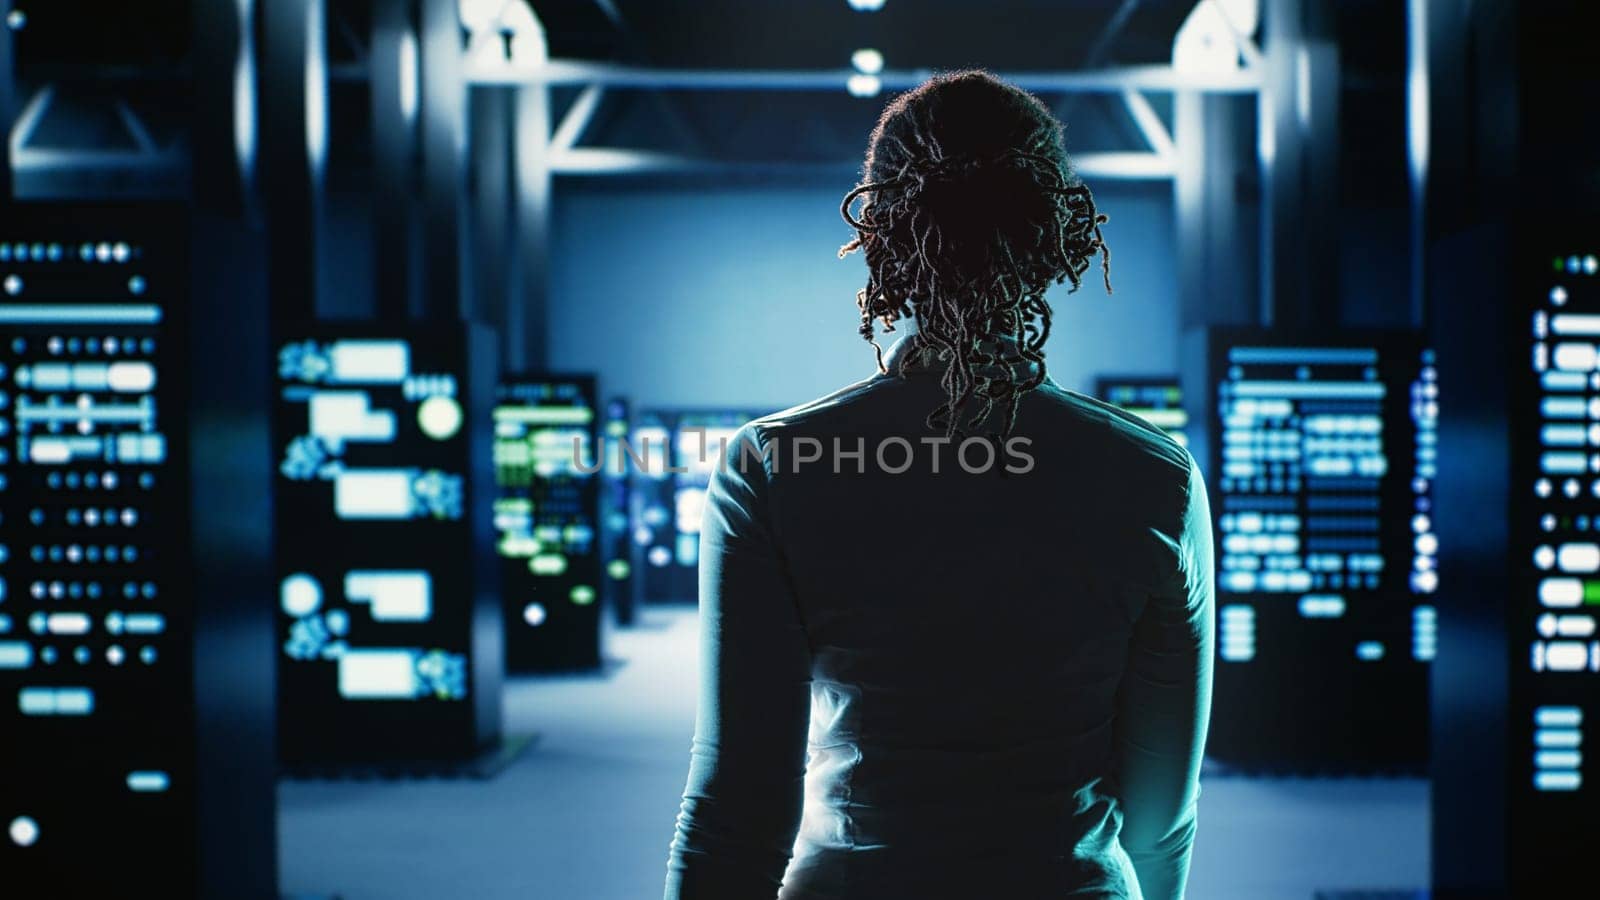 Engineer strolls through server rows by DCStudio